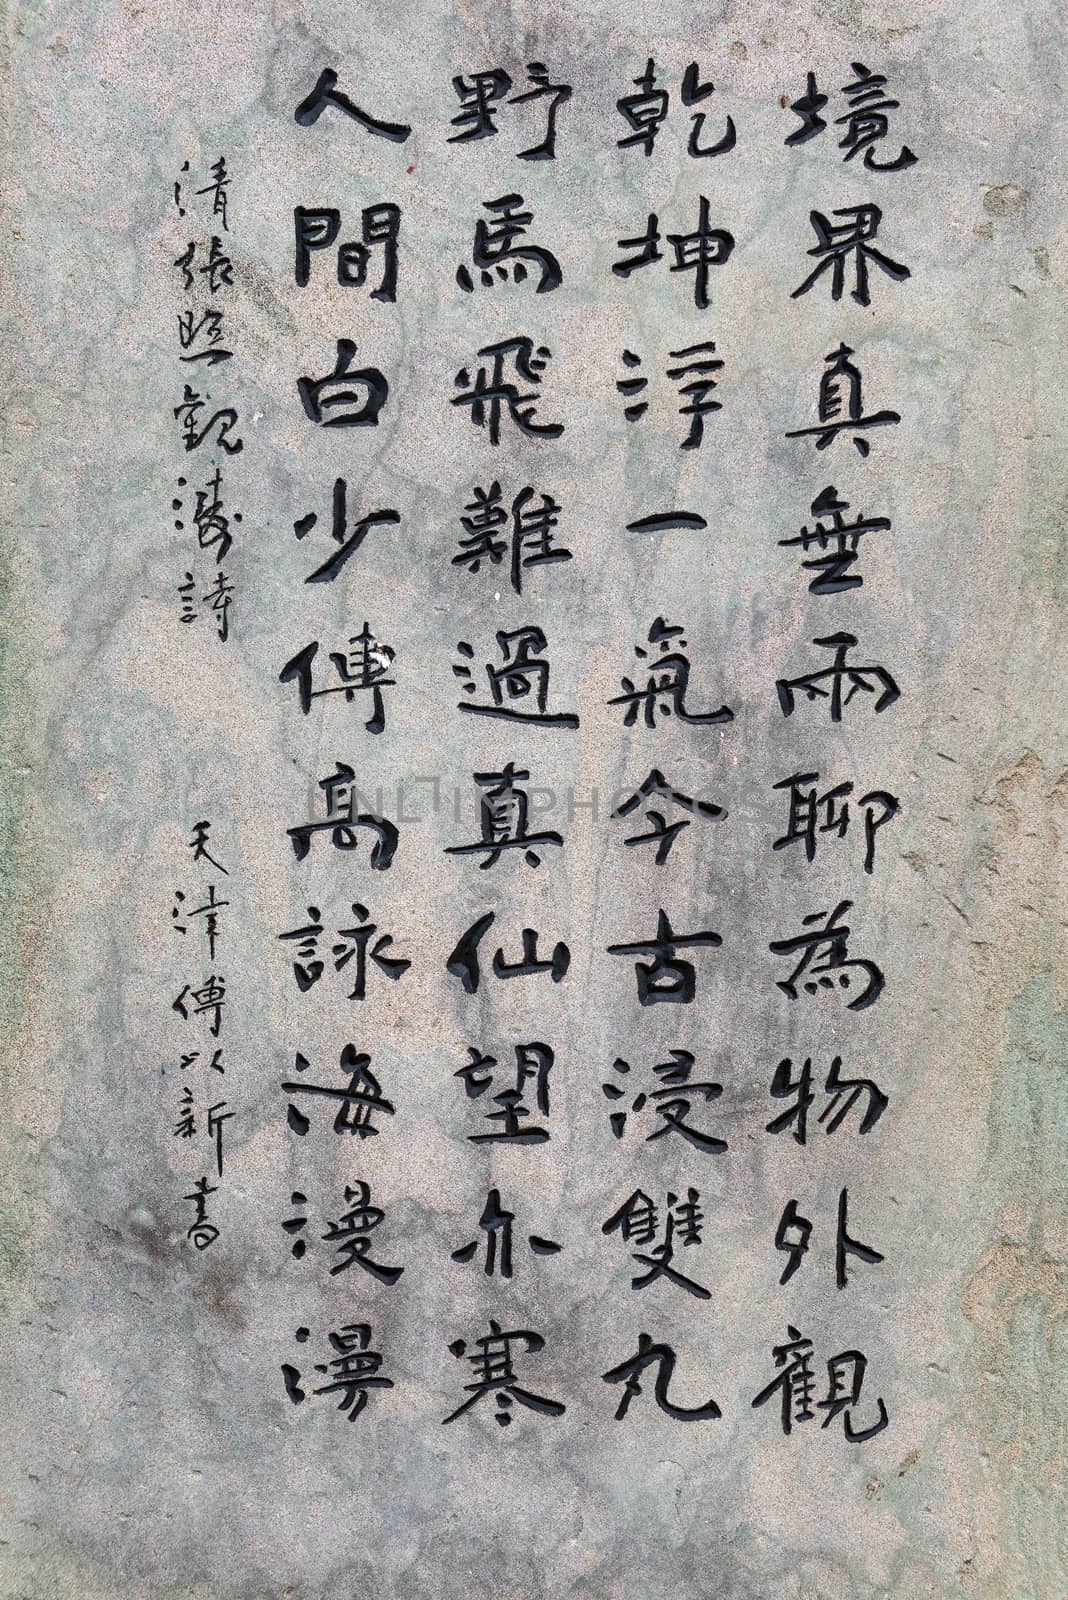 Grunge Chinese Calligraphy on memorial stone closeup photo